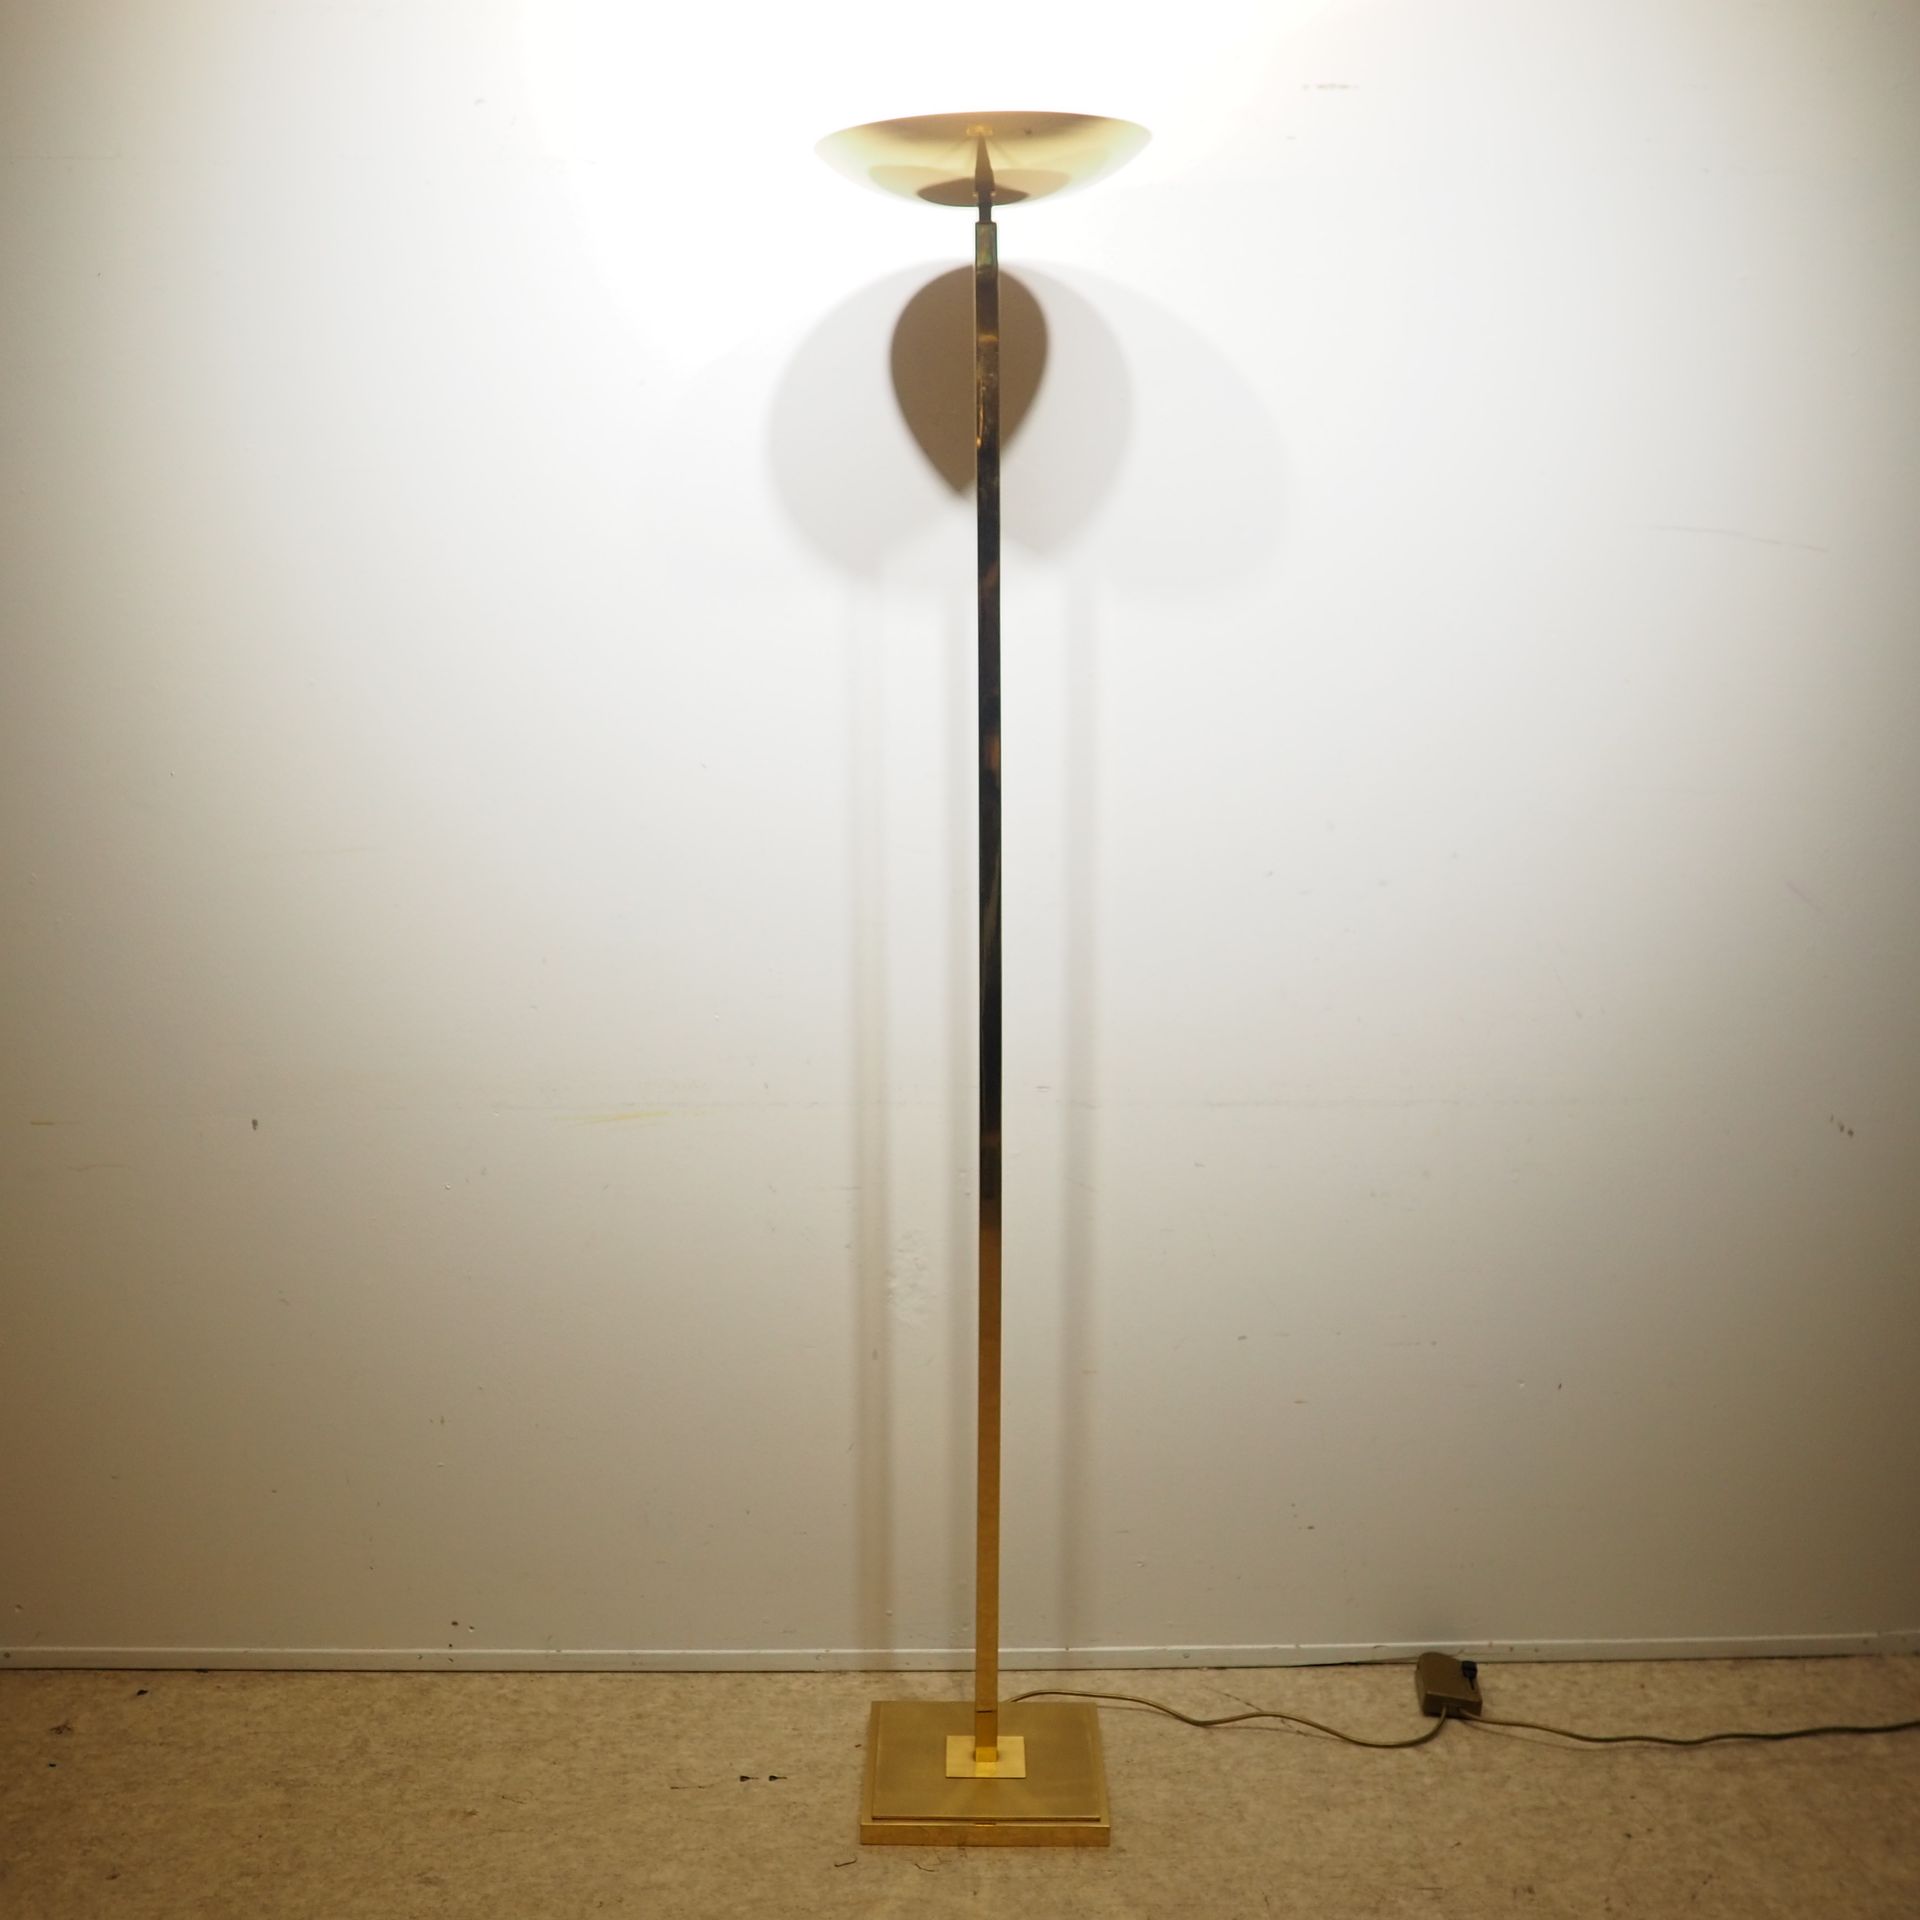 Lampadaire halogène vers 1980 约1980年的卤素落地灯：黄铜轴，带金色光泽，带二进制照明，高度：179厘米